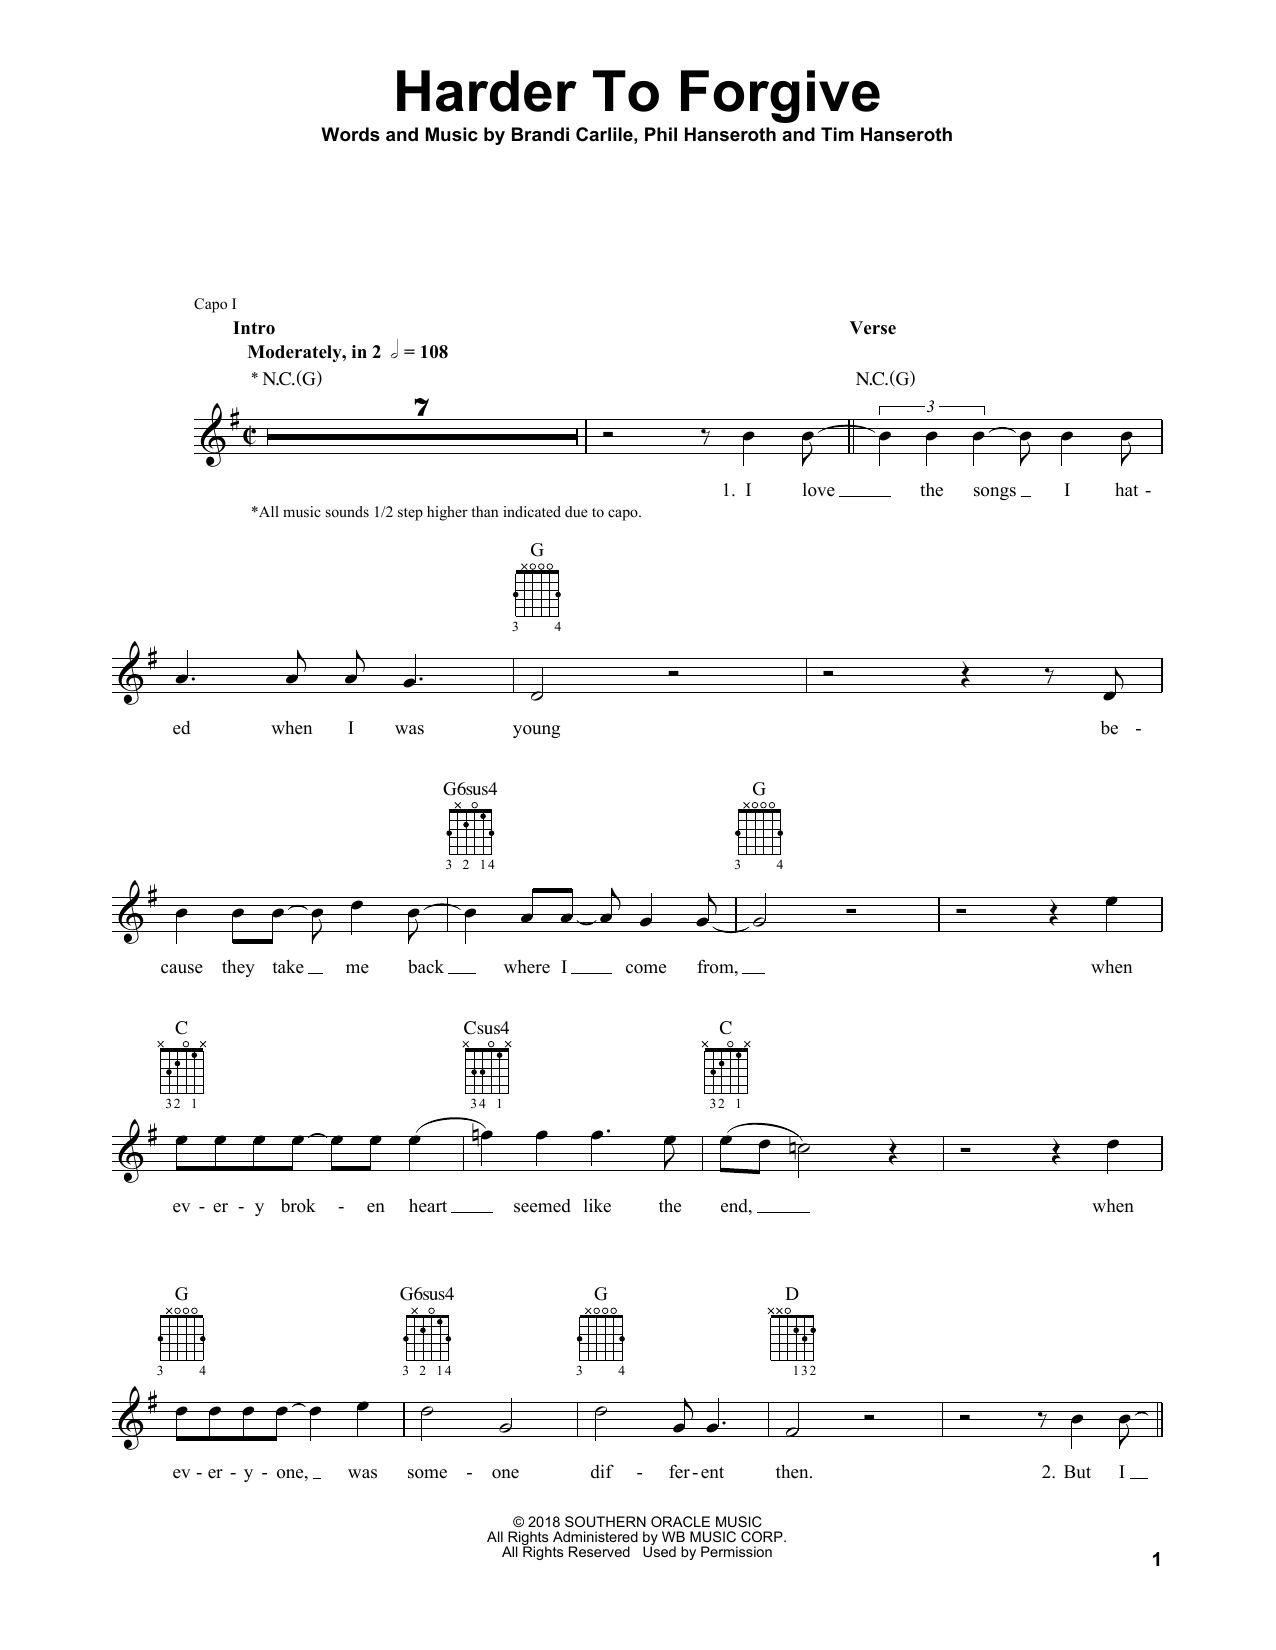 Brandi Carlile Harder To Forgive Sheet Music Notes & Chords for Guitar Tab - Download or Print PDF